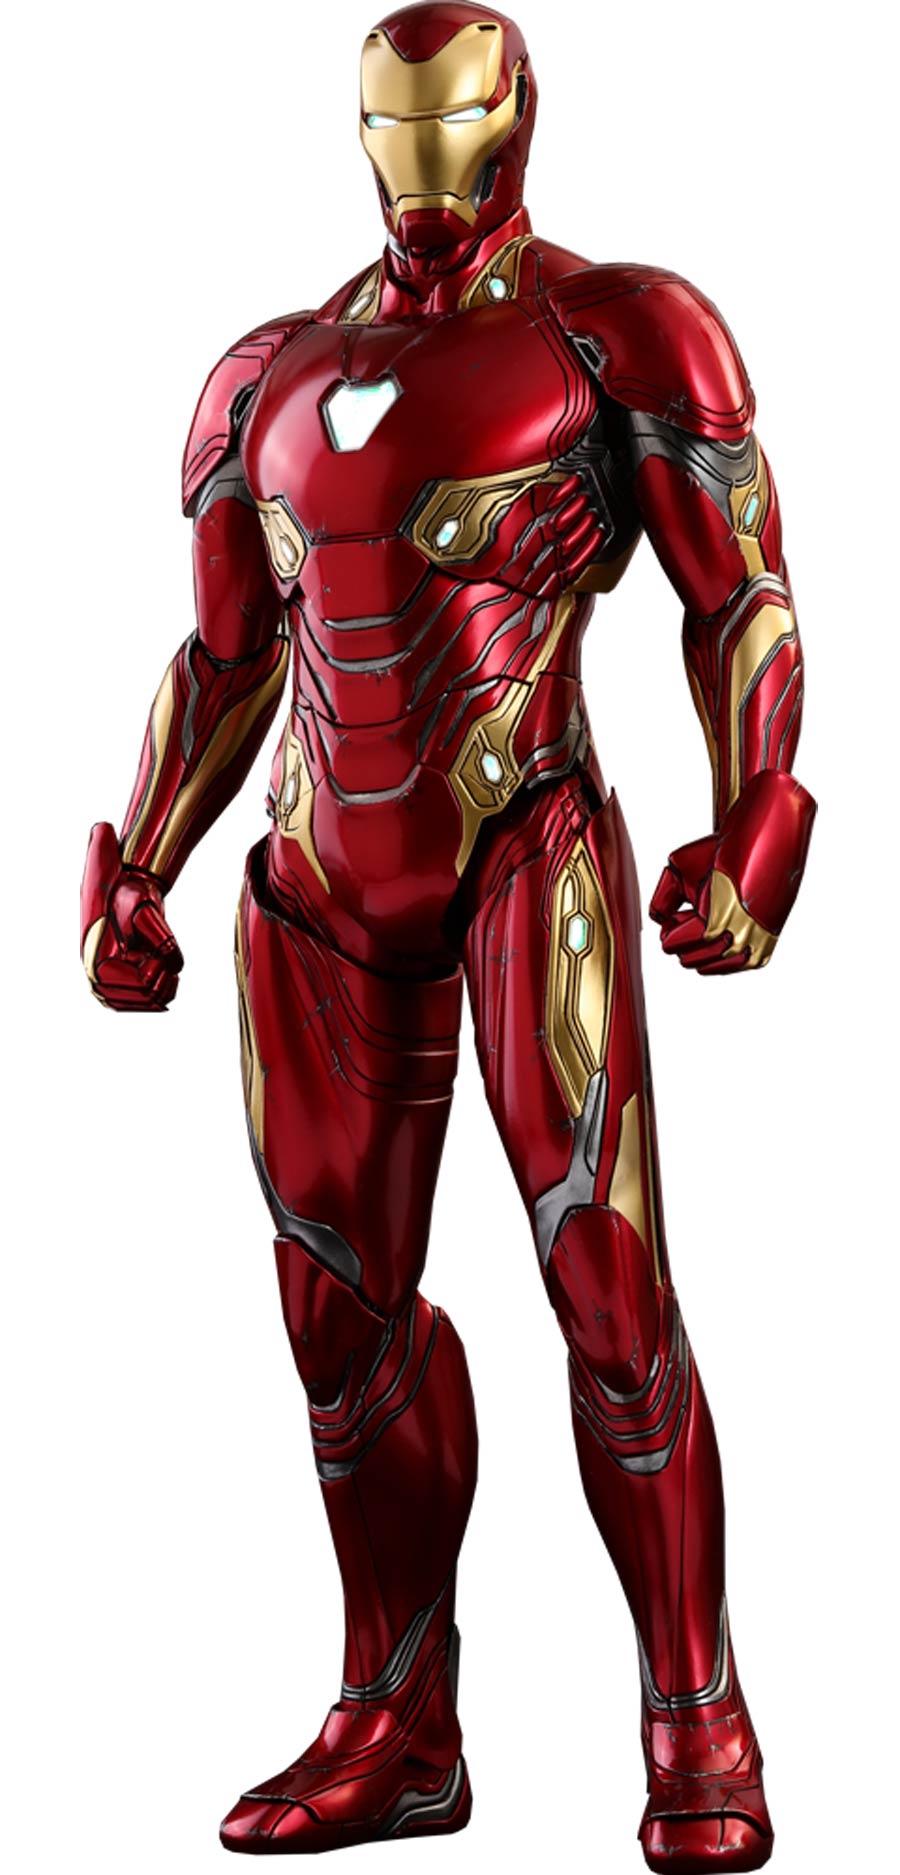 Avengers Infinity War Iron Man Diecast Movie Masterpiece Series Sixth Scale 12.59-Inch Figure